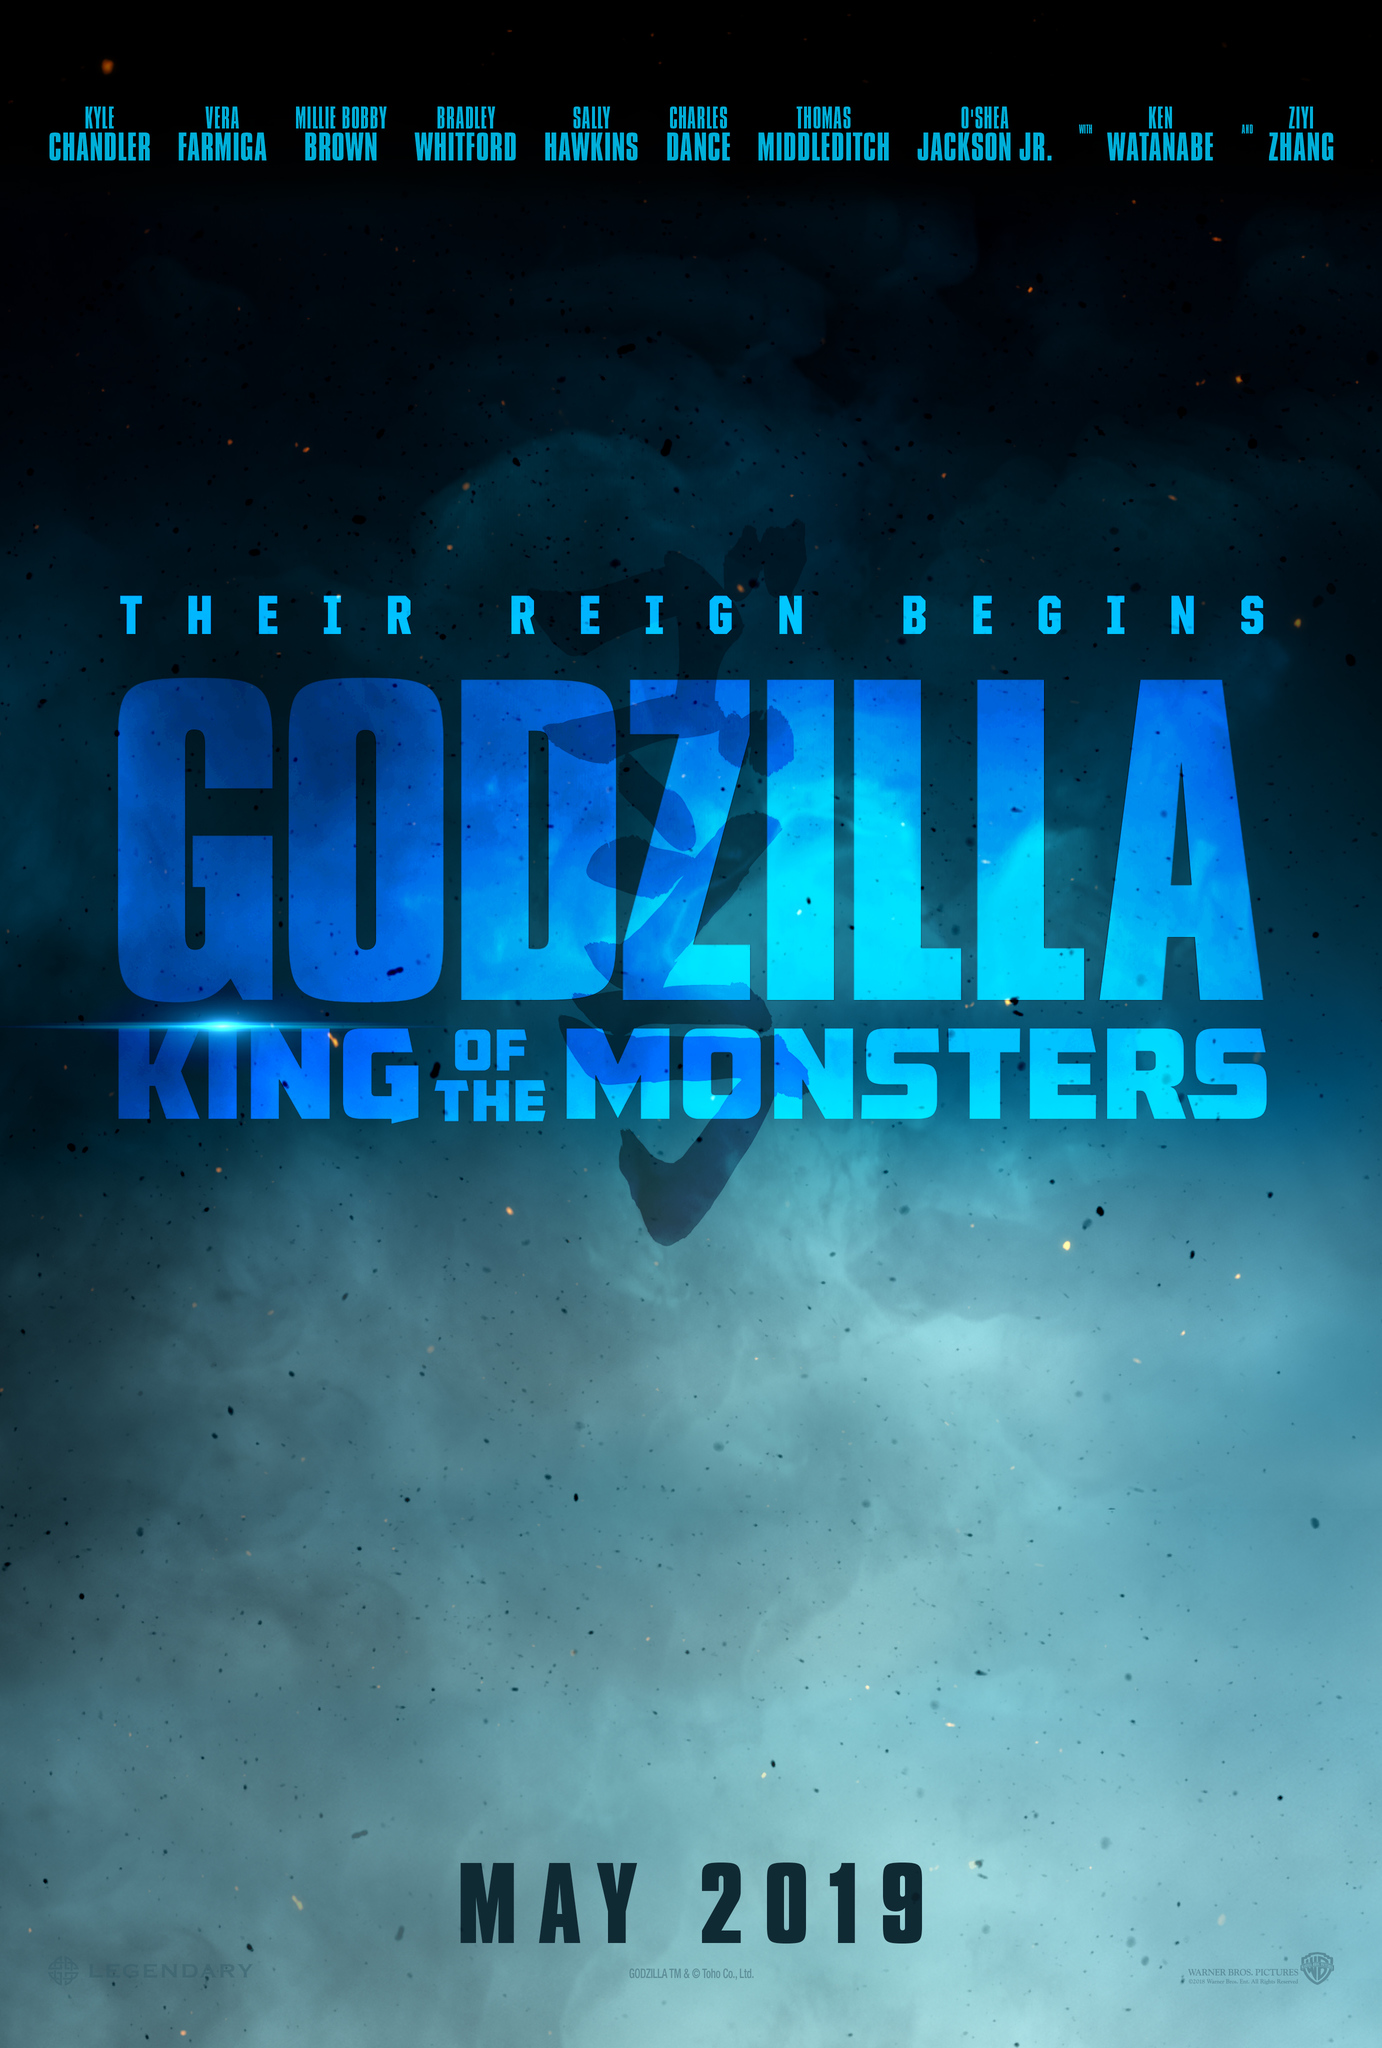 Godzilla KOTM Poster advance.jpg